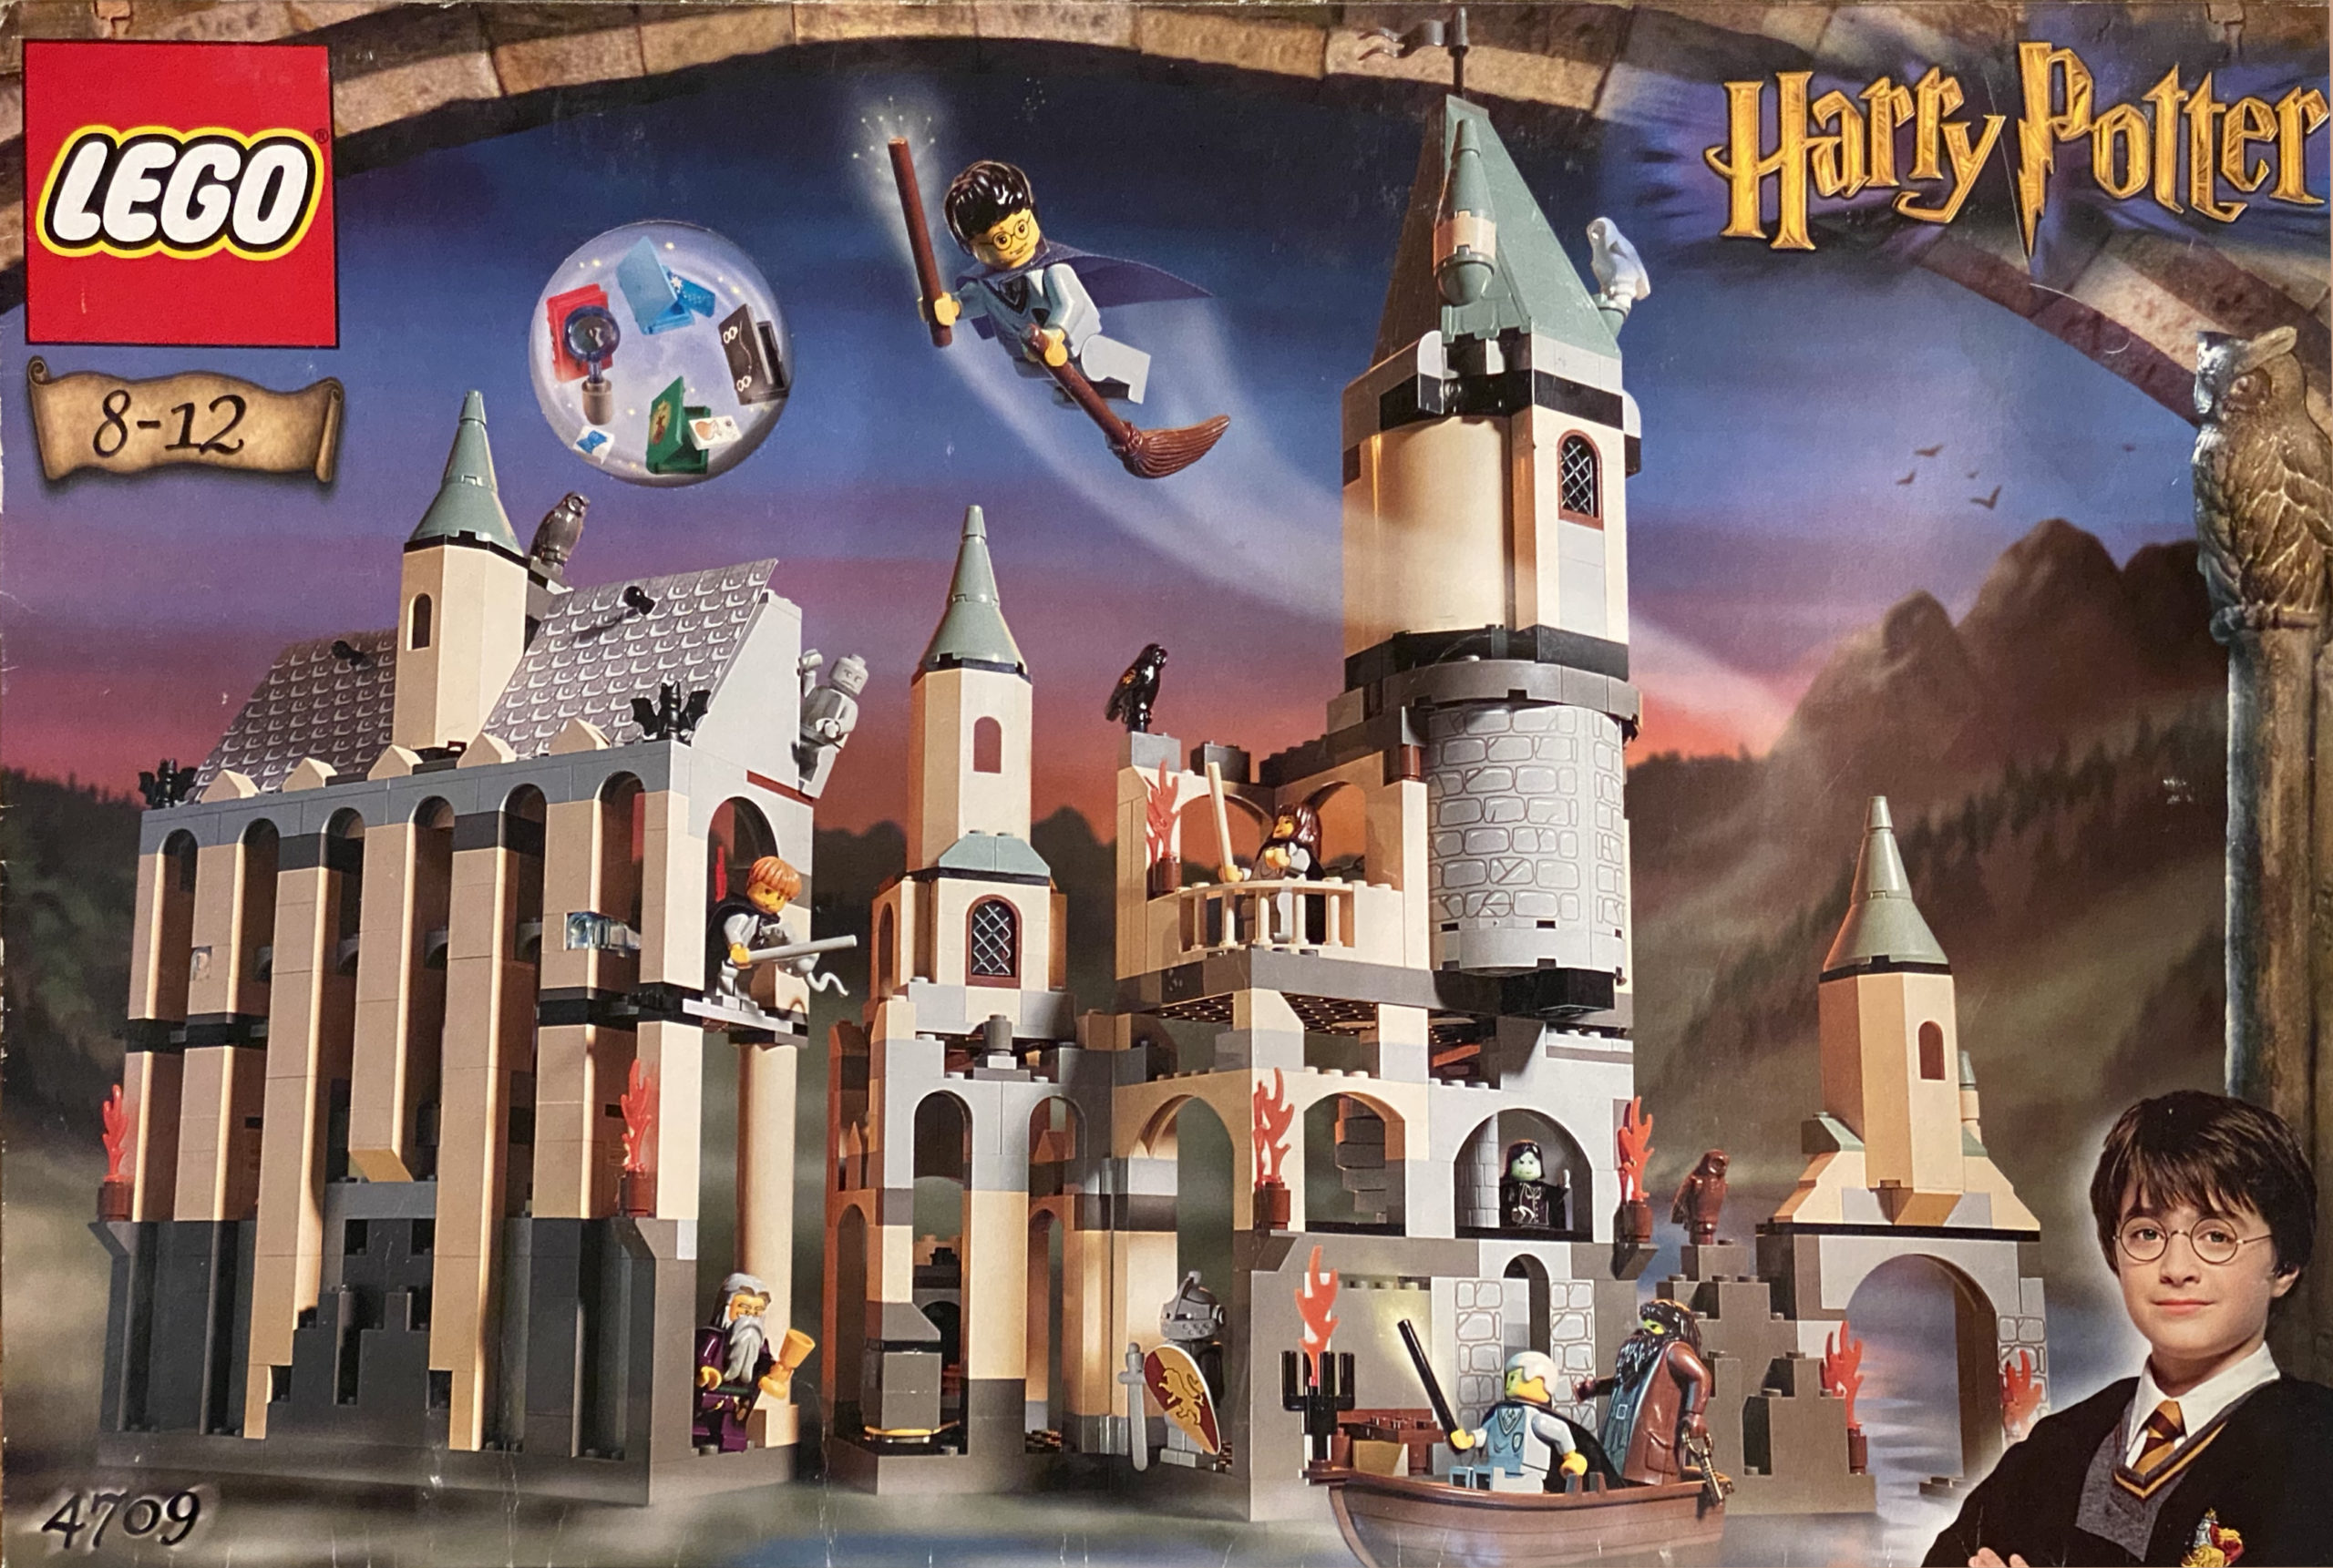 4709: Hogwarts Castle